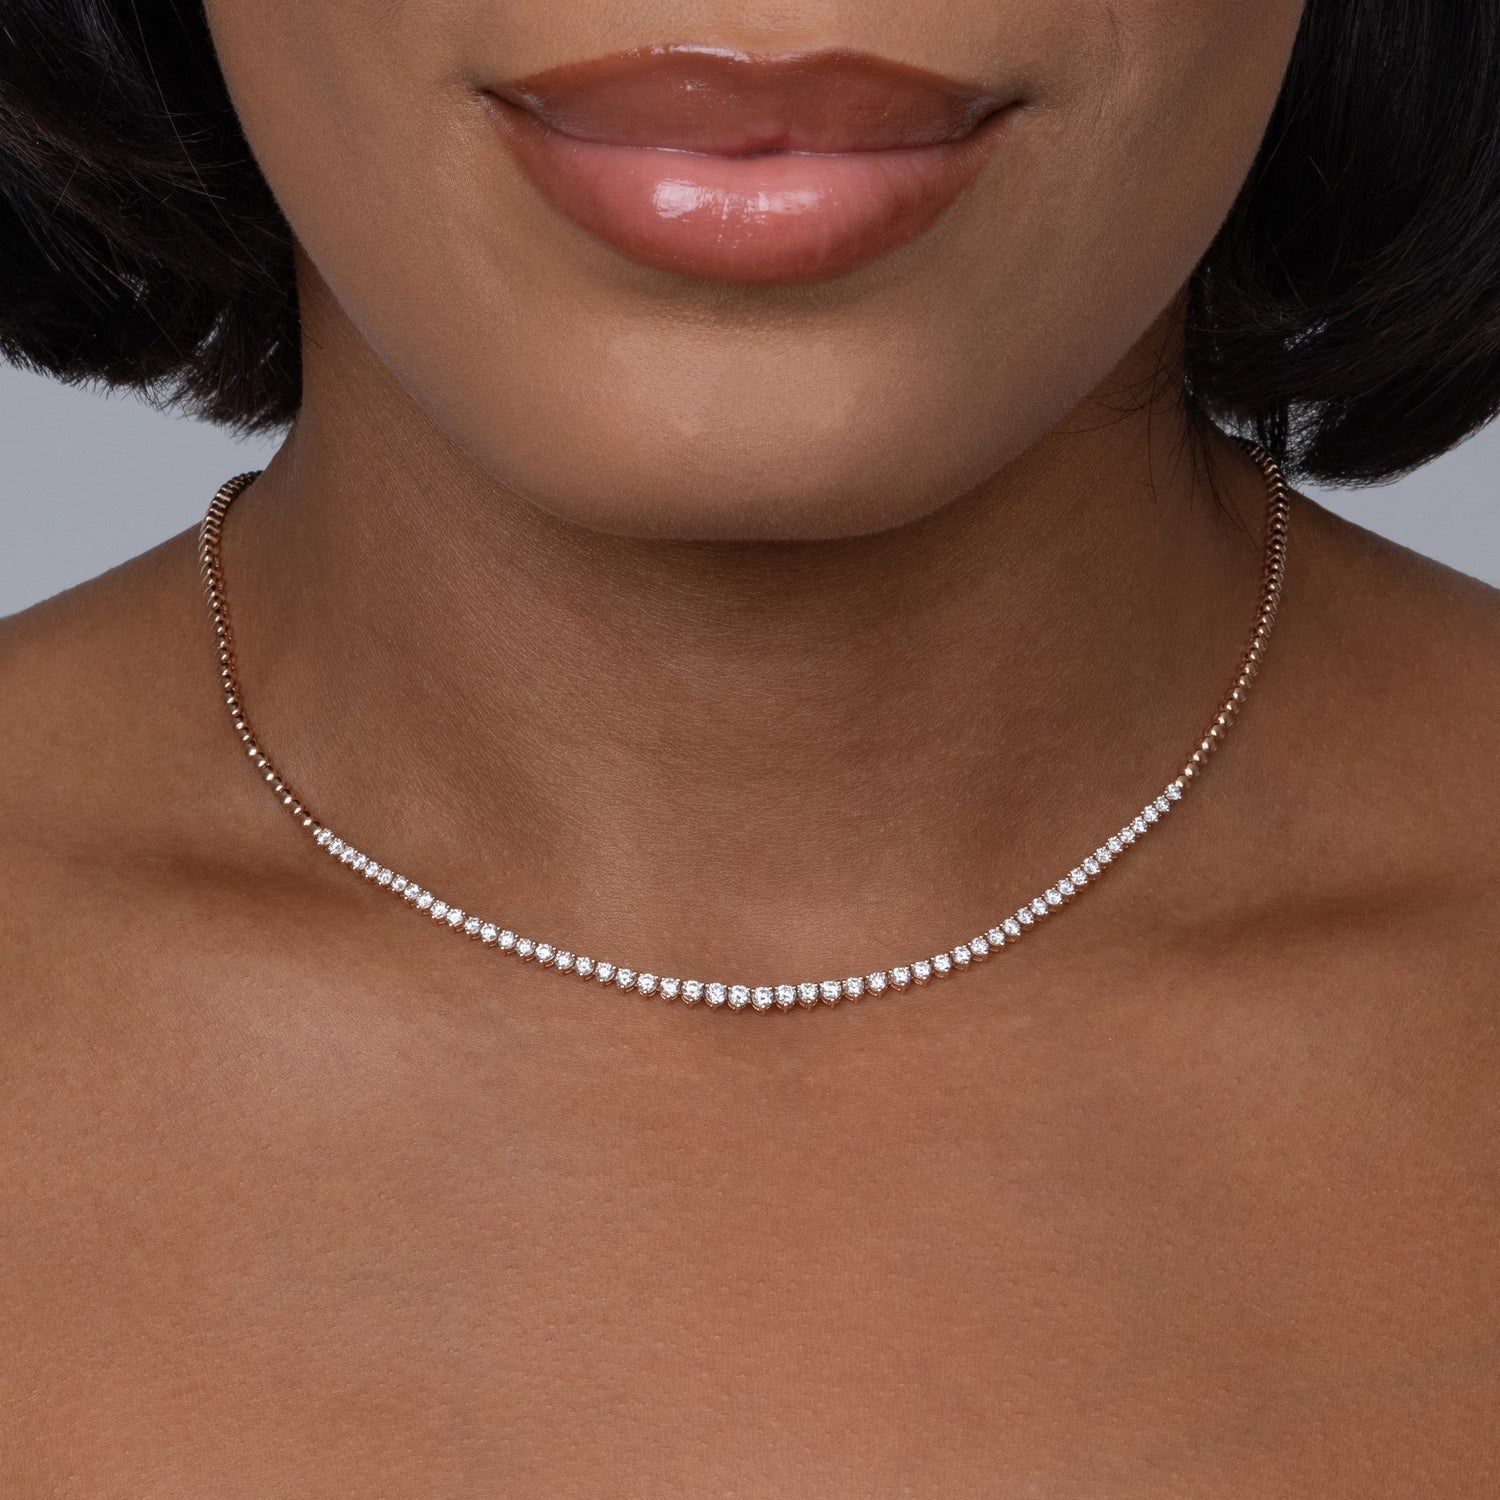 15ct Lab Diamond Tennis Necklace - The Jewelry Exchange